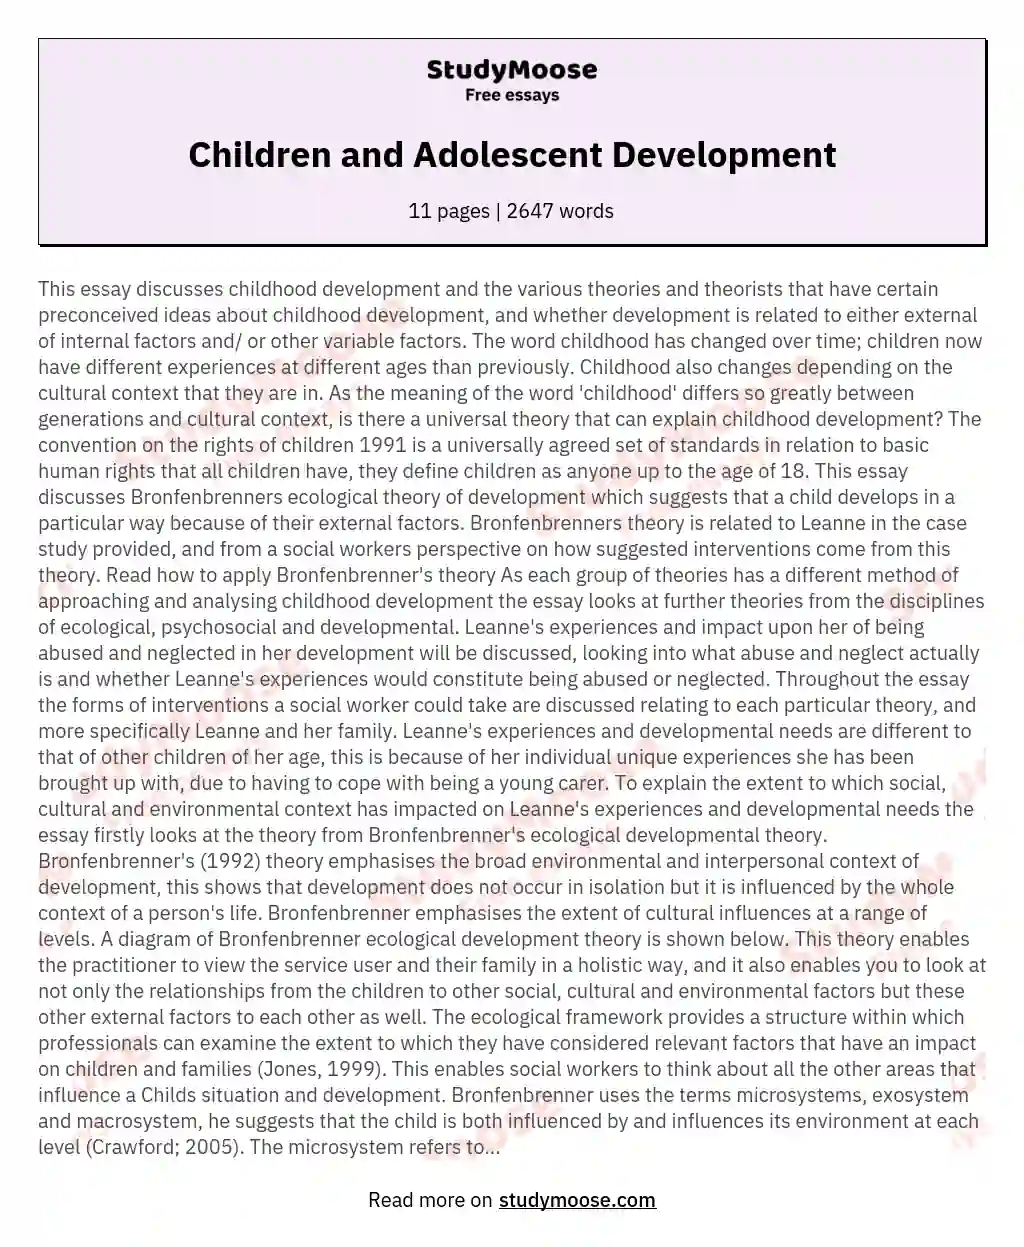 child and adolescent development research paper pdf 2020